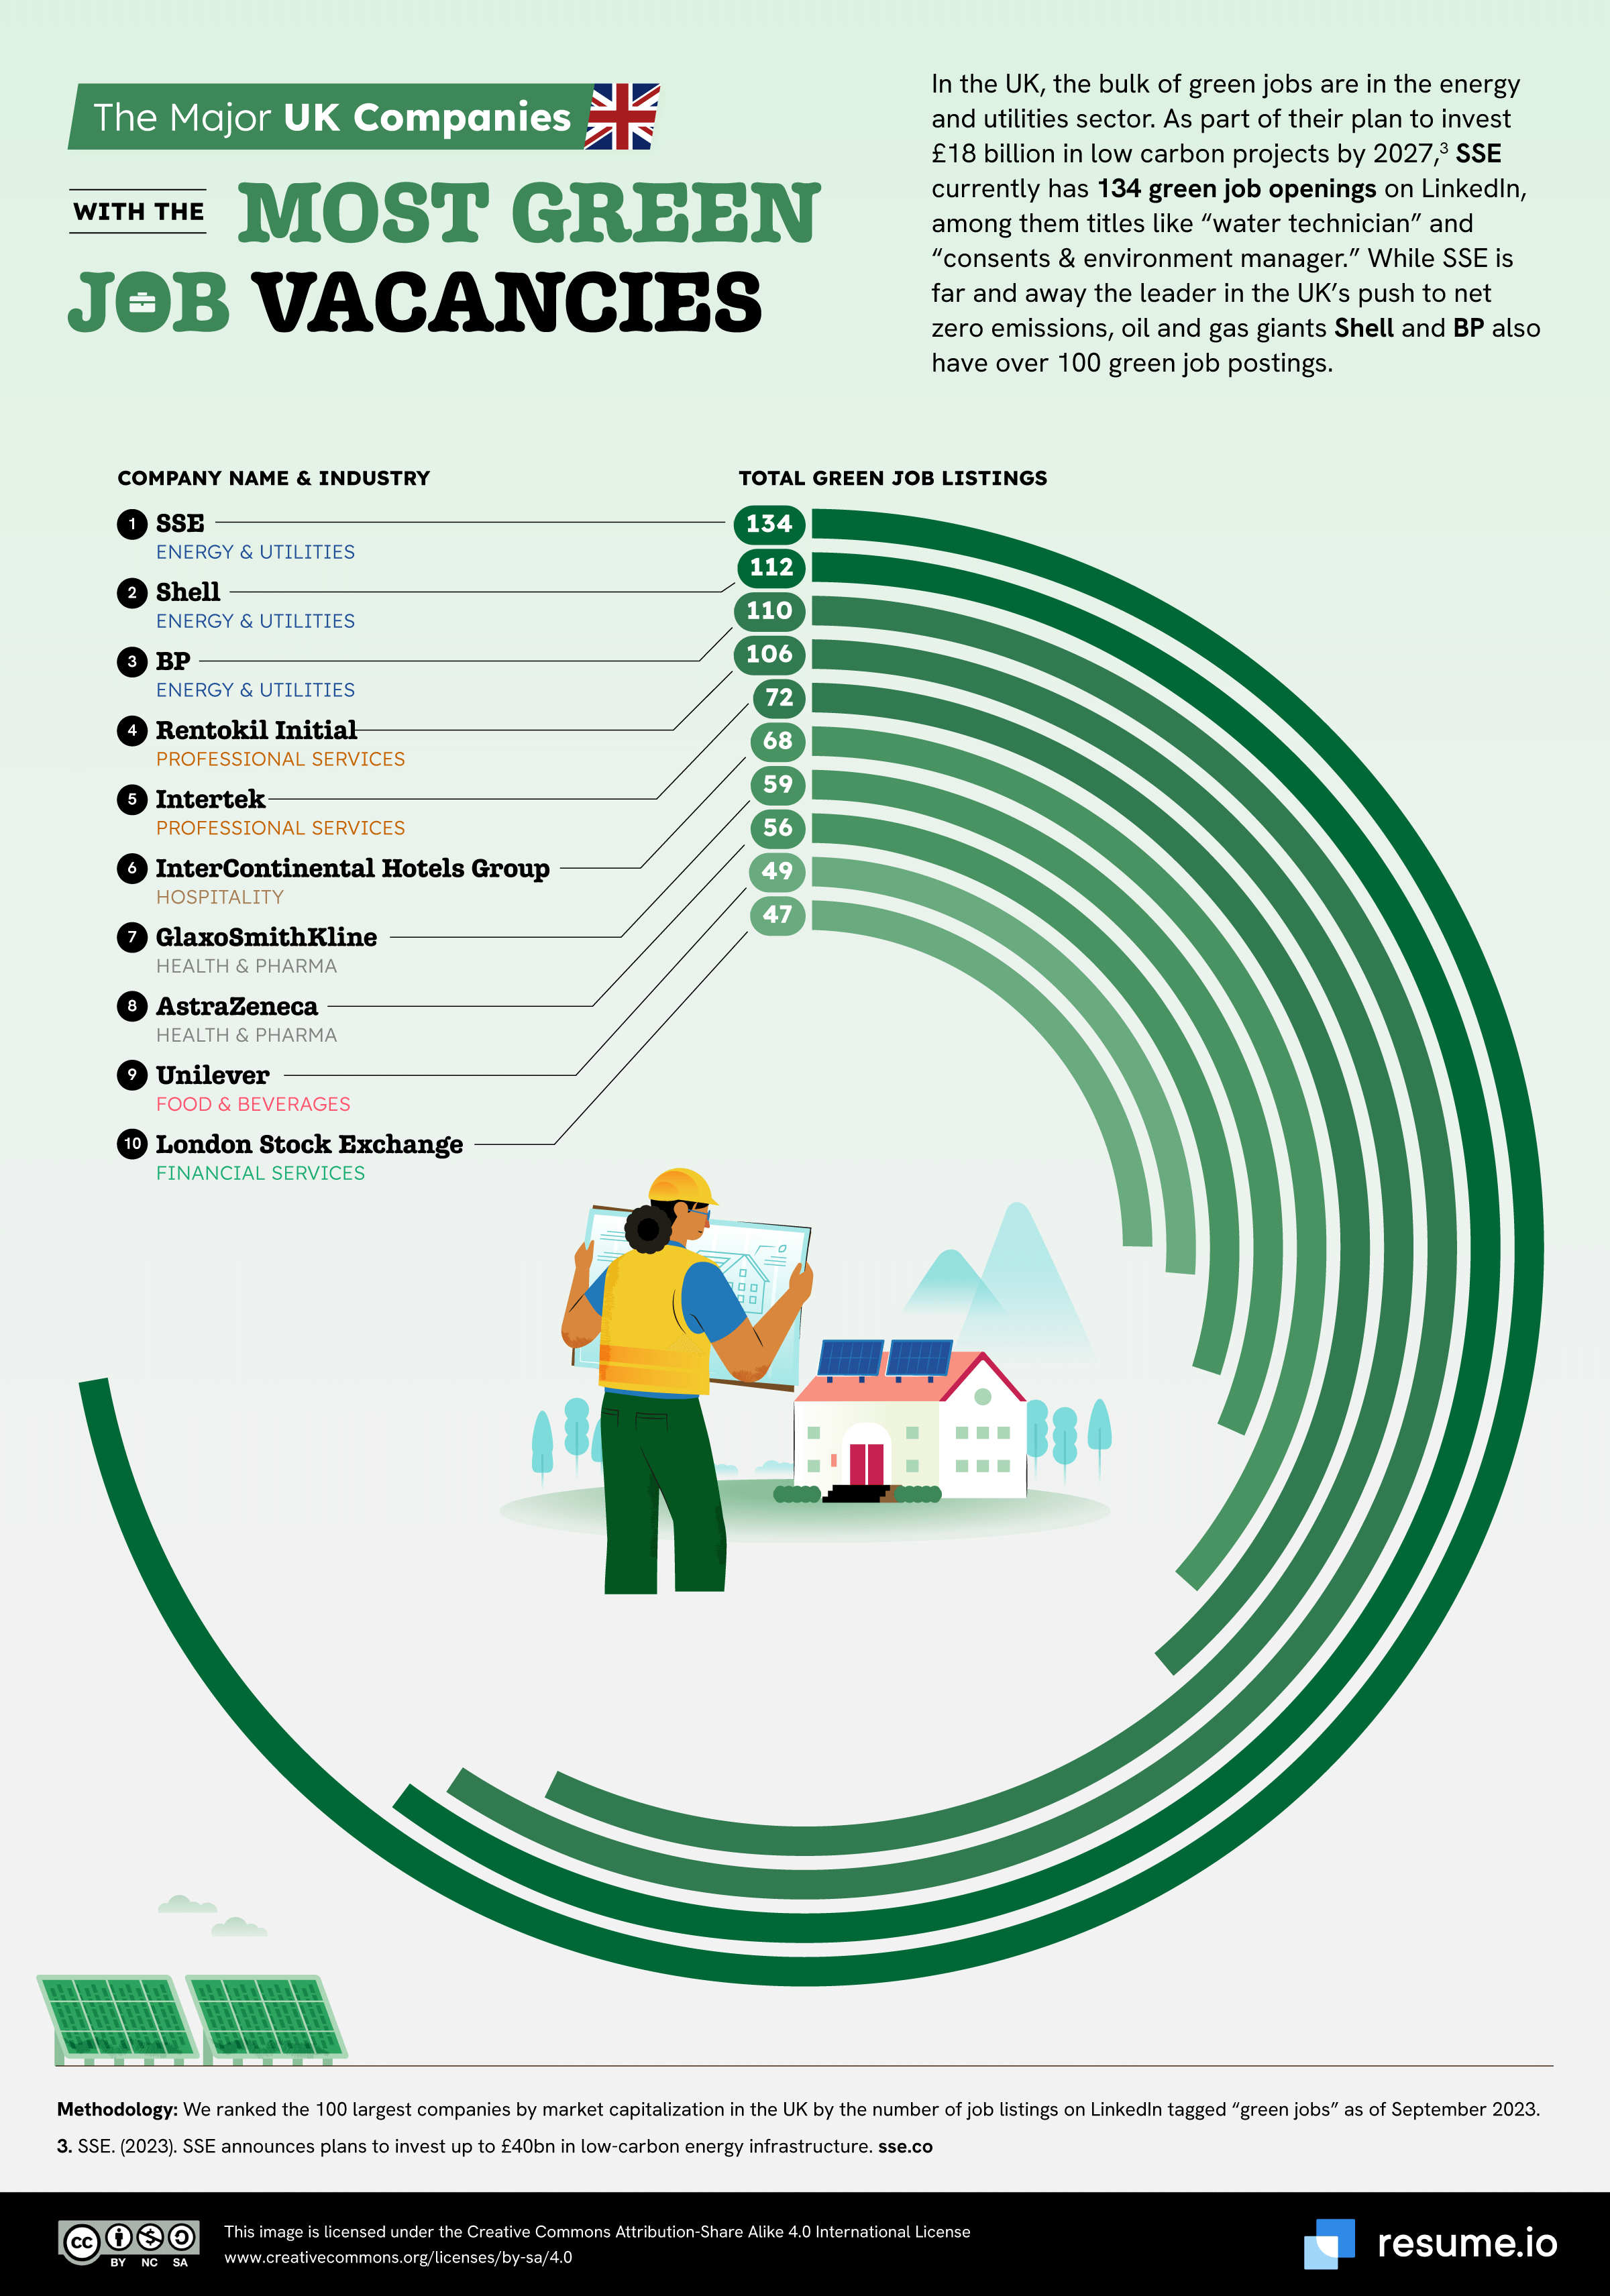 UK companies with most green job vacancies